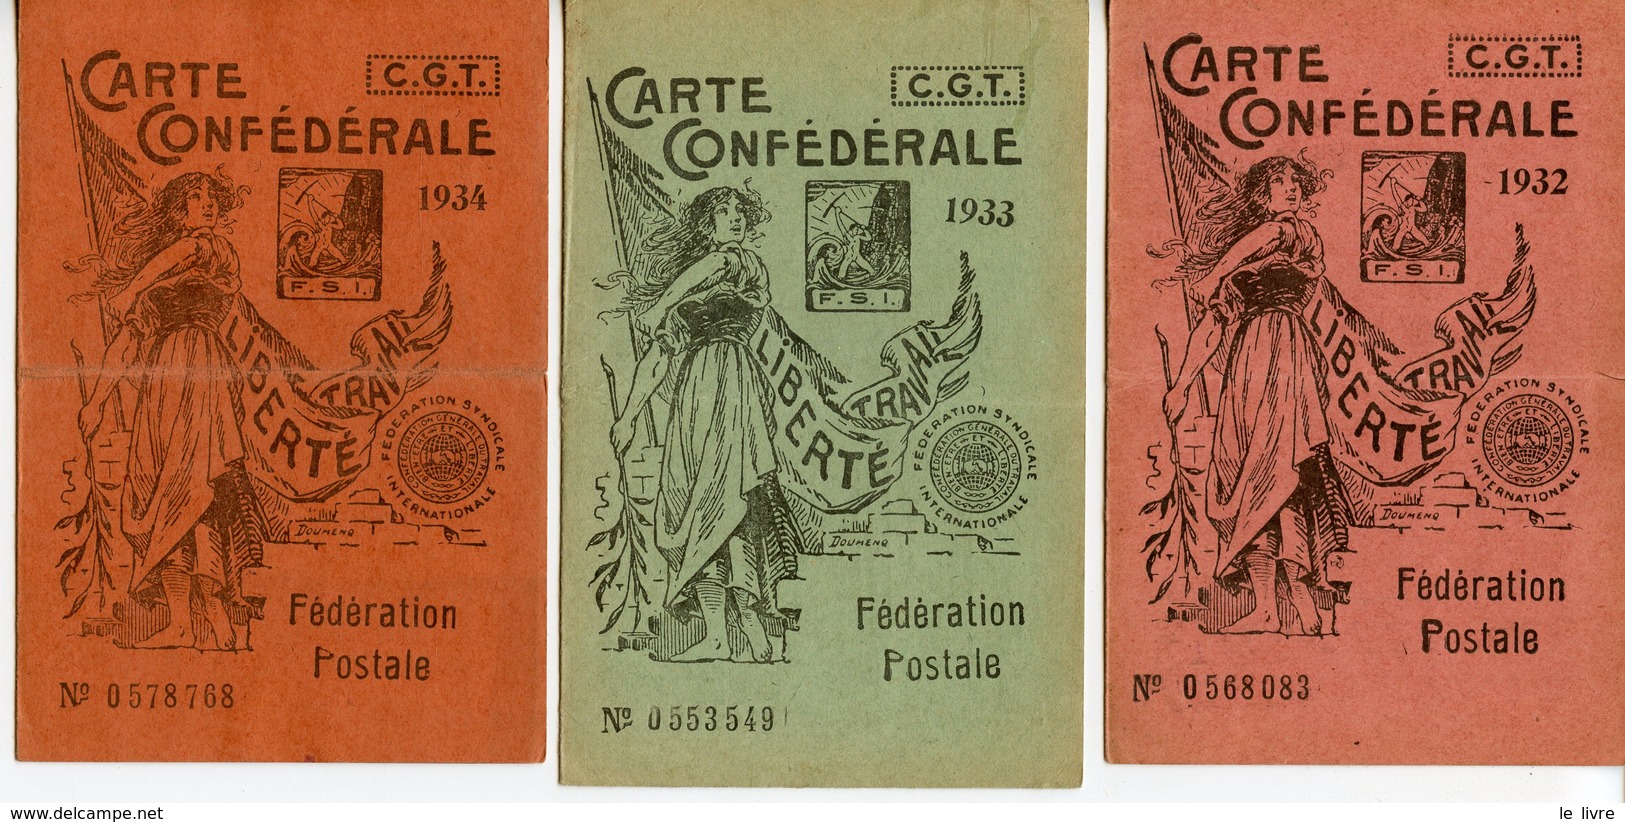 1282. LOT DE 3 CARTES CONFEDERALES CGT DE LA FEDERATION POSTALE 1932 1933 1934 - Ohne Zuordnung